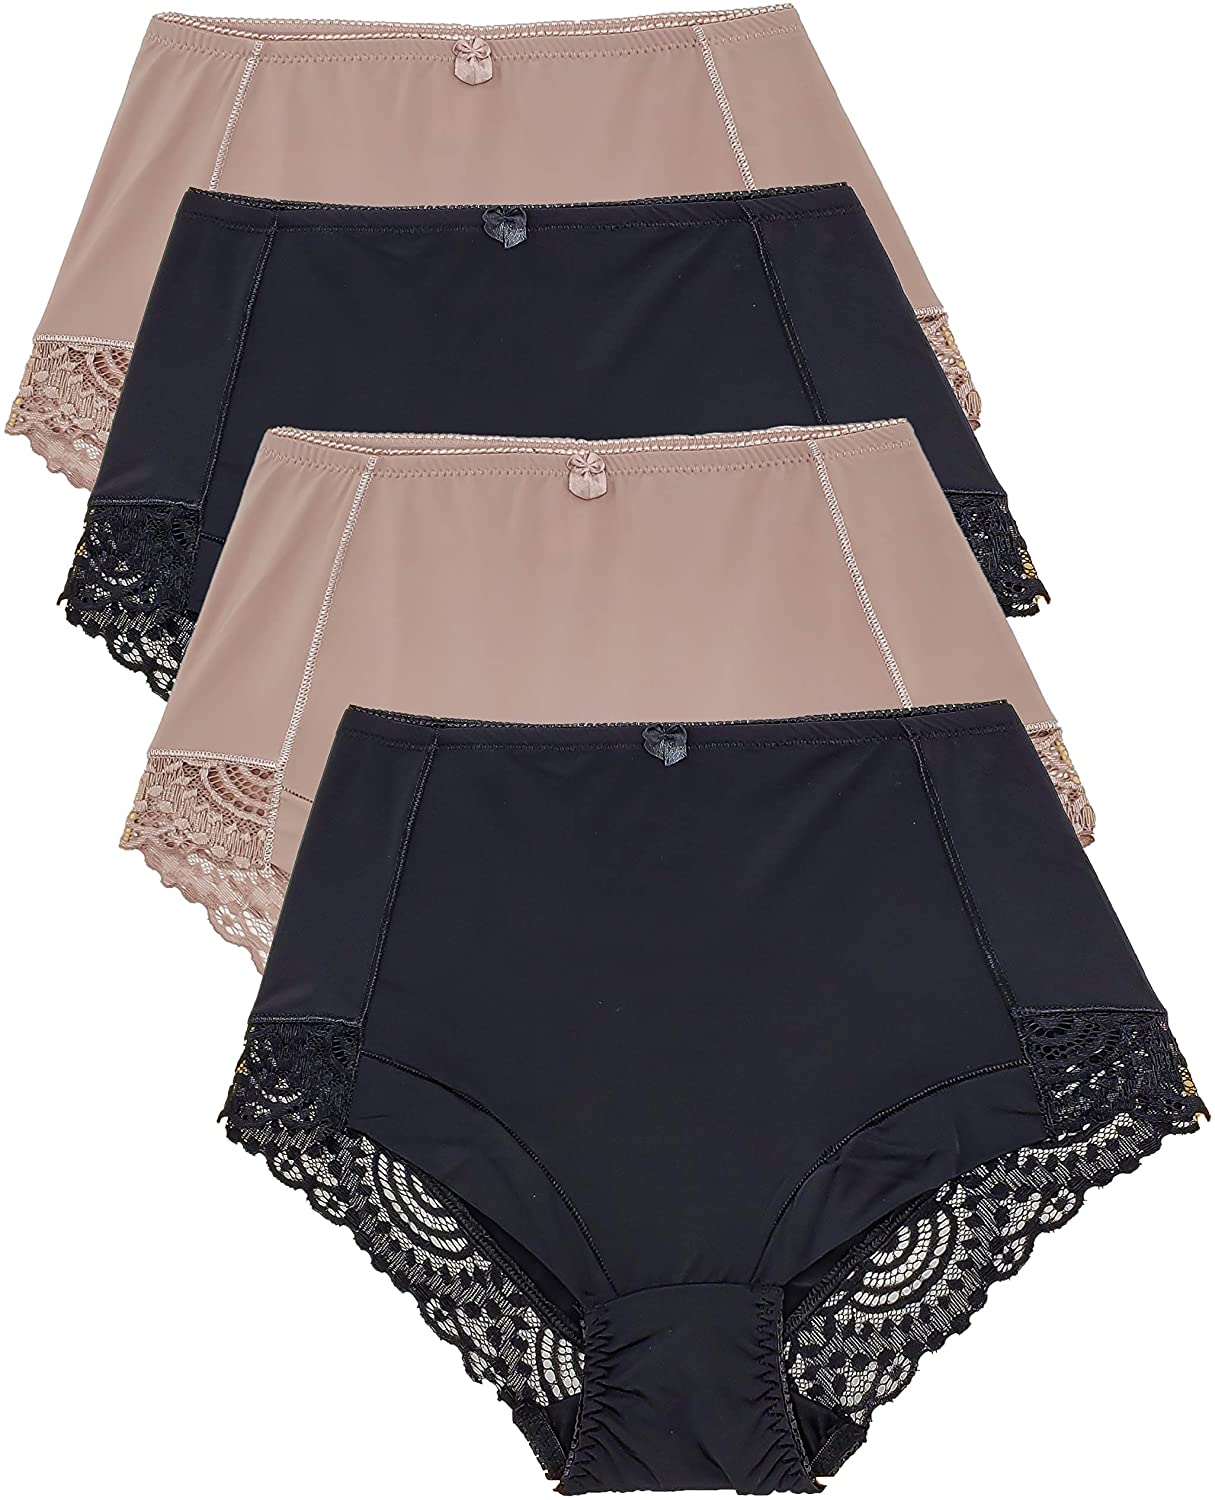 Barbra Lingerie Womens Briefs Underwear Tummy Control Panties S-Plus Size 4  Pack